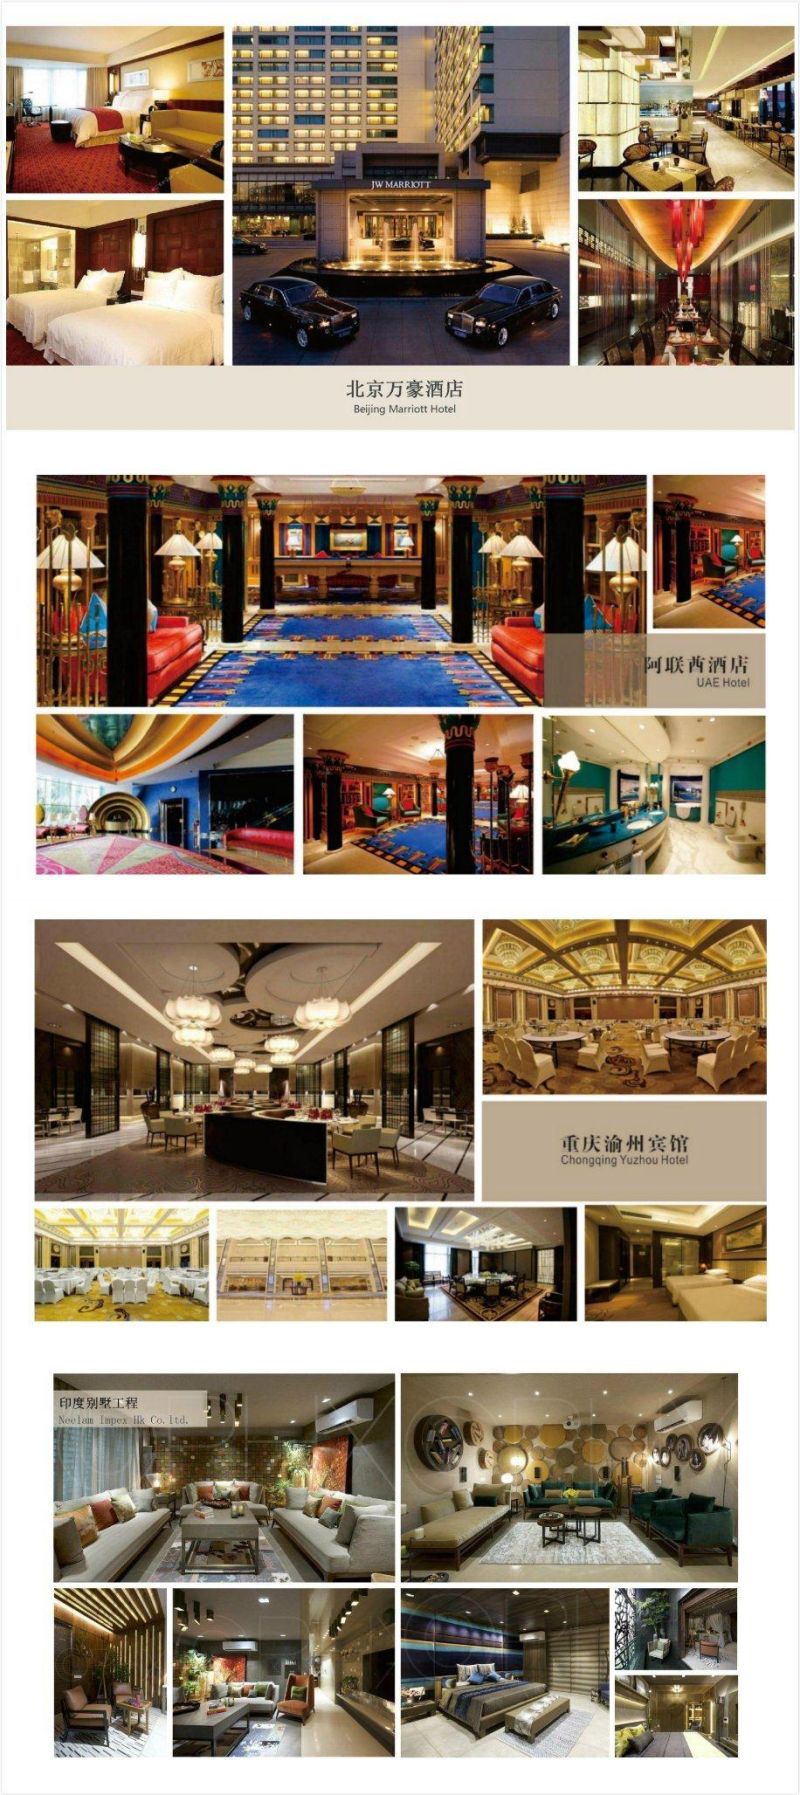 China Foshan Commercial Modern Design Custom Made Furniture for Hotel